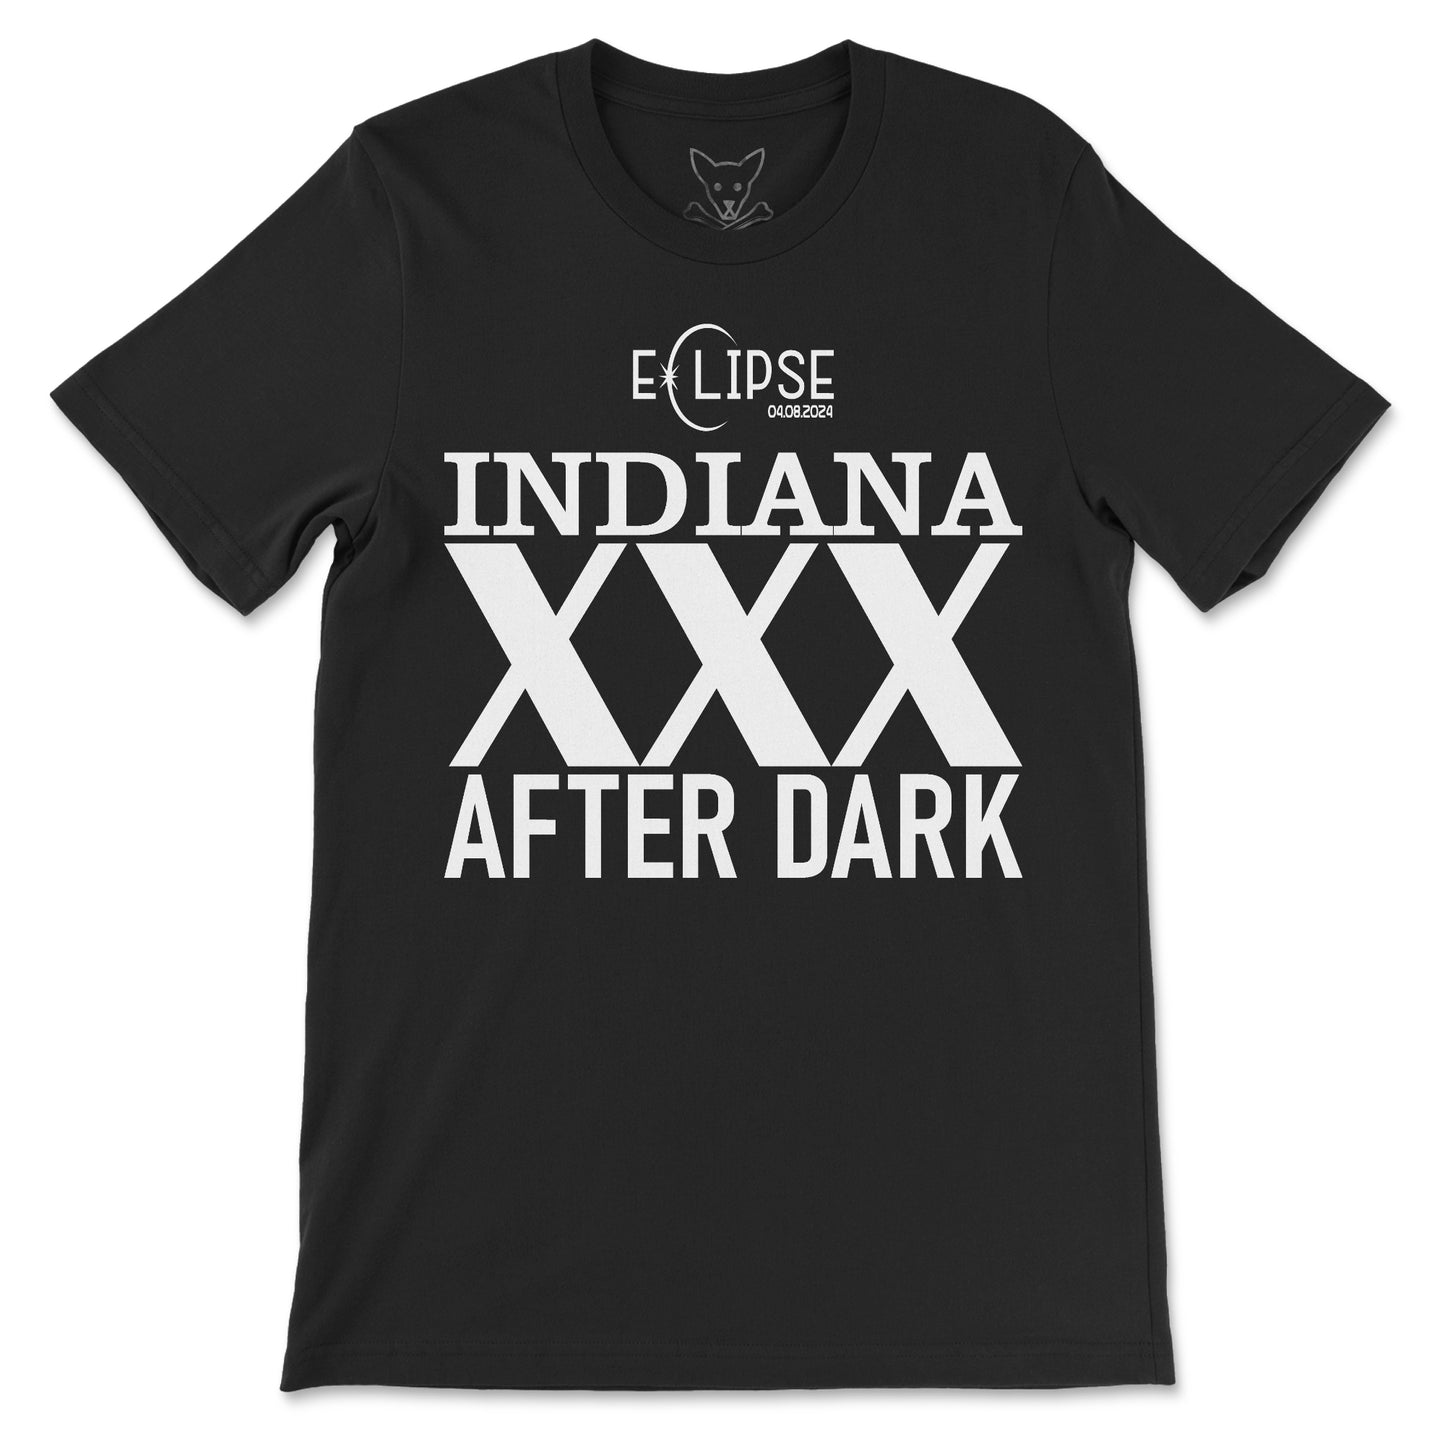 Indiana XXX After Dark Tee